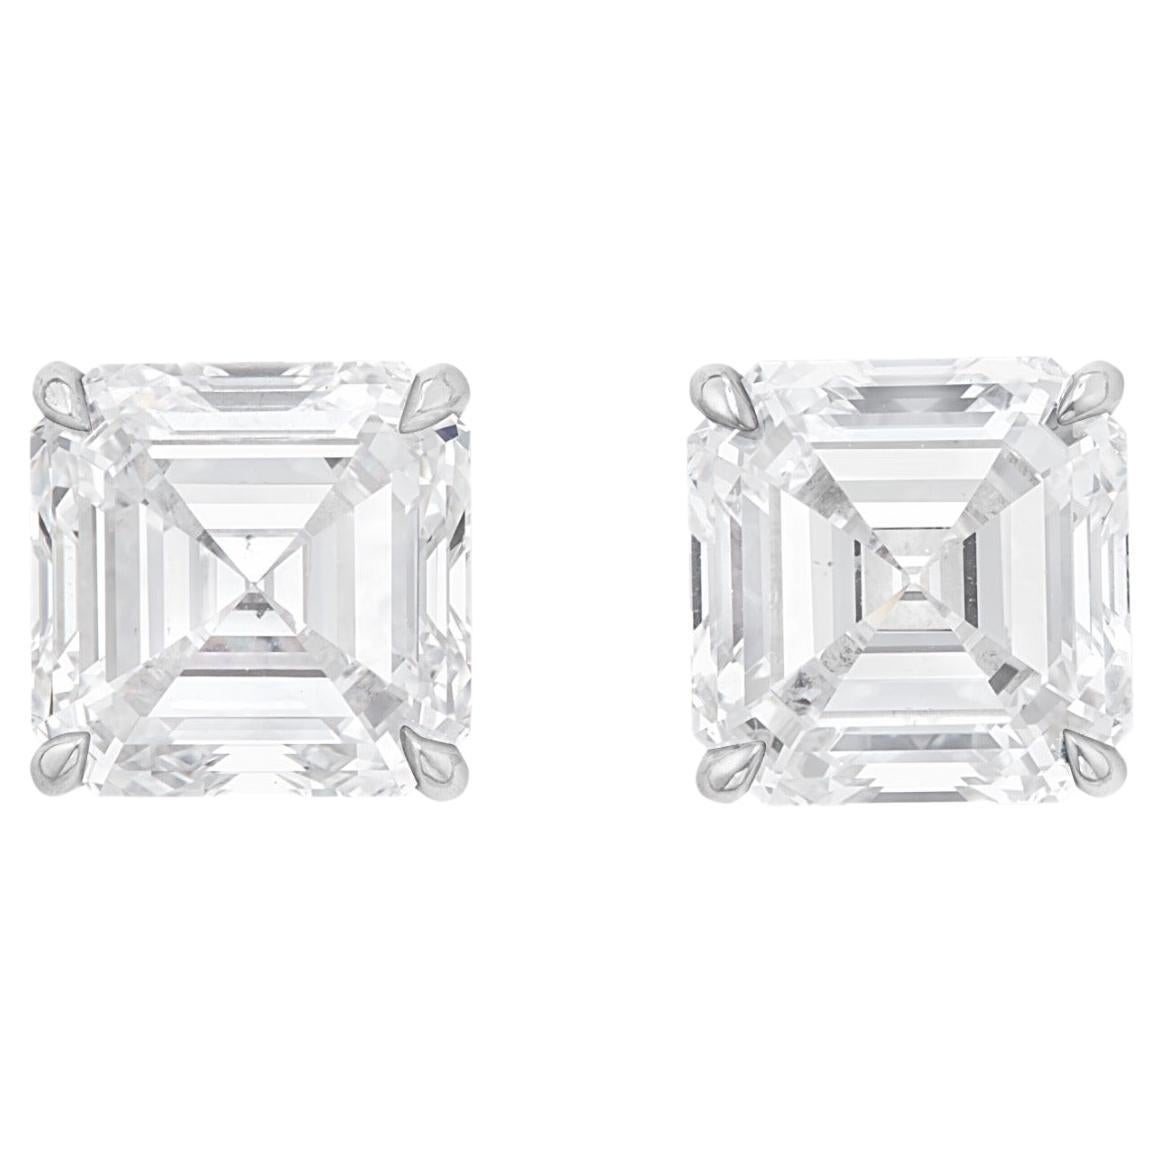 GIA Certified 6.02 carat Asscher Cut F/VS2 Diamond Stud Earrings in Platinum 950